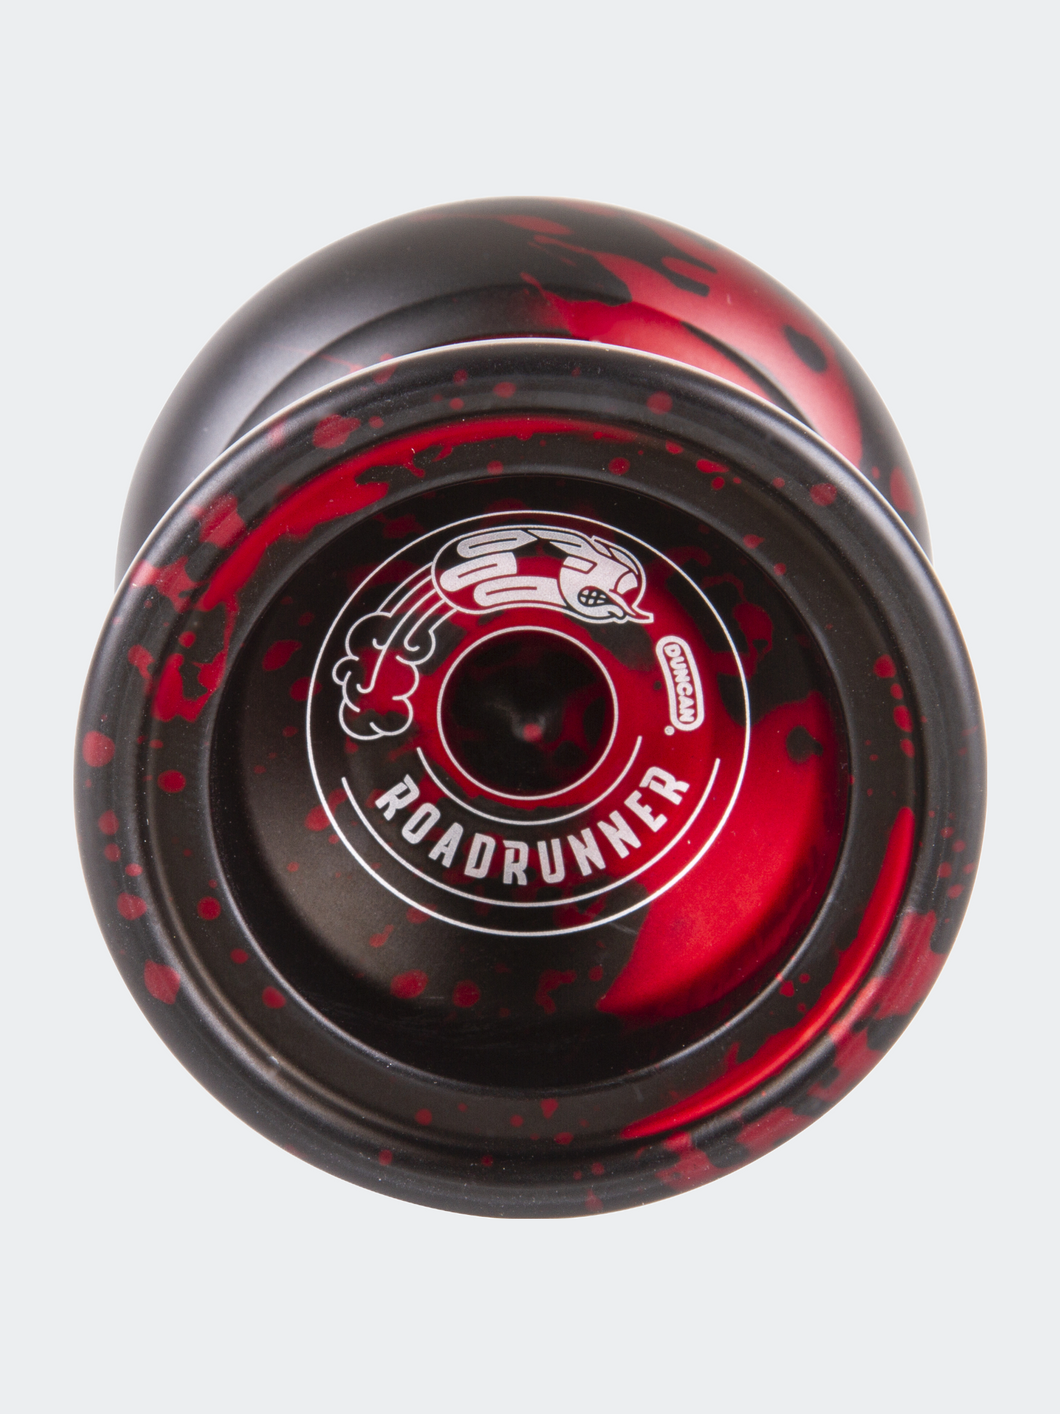 Roadrunner Yo-Yo, Unresponsive Expert Level Yo-Yo, Concave Bearing and Aluminum Body, Black With Red Splash